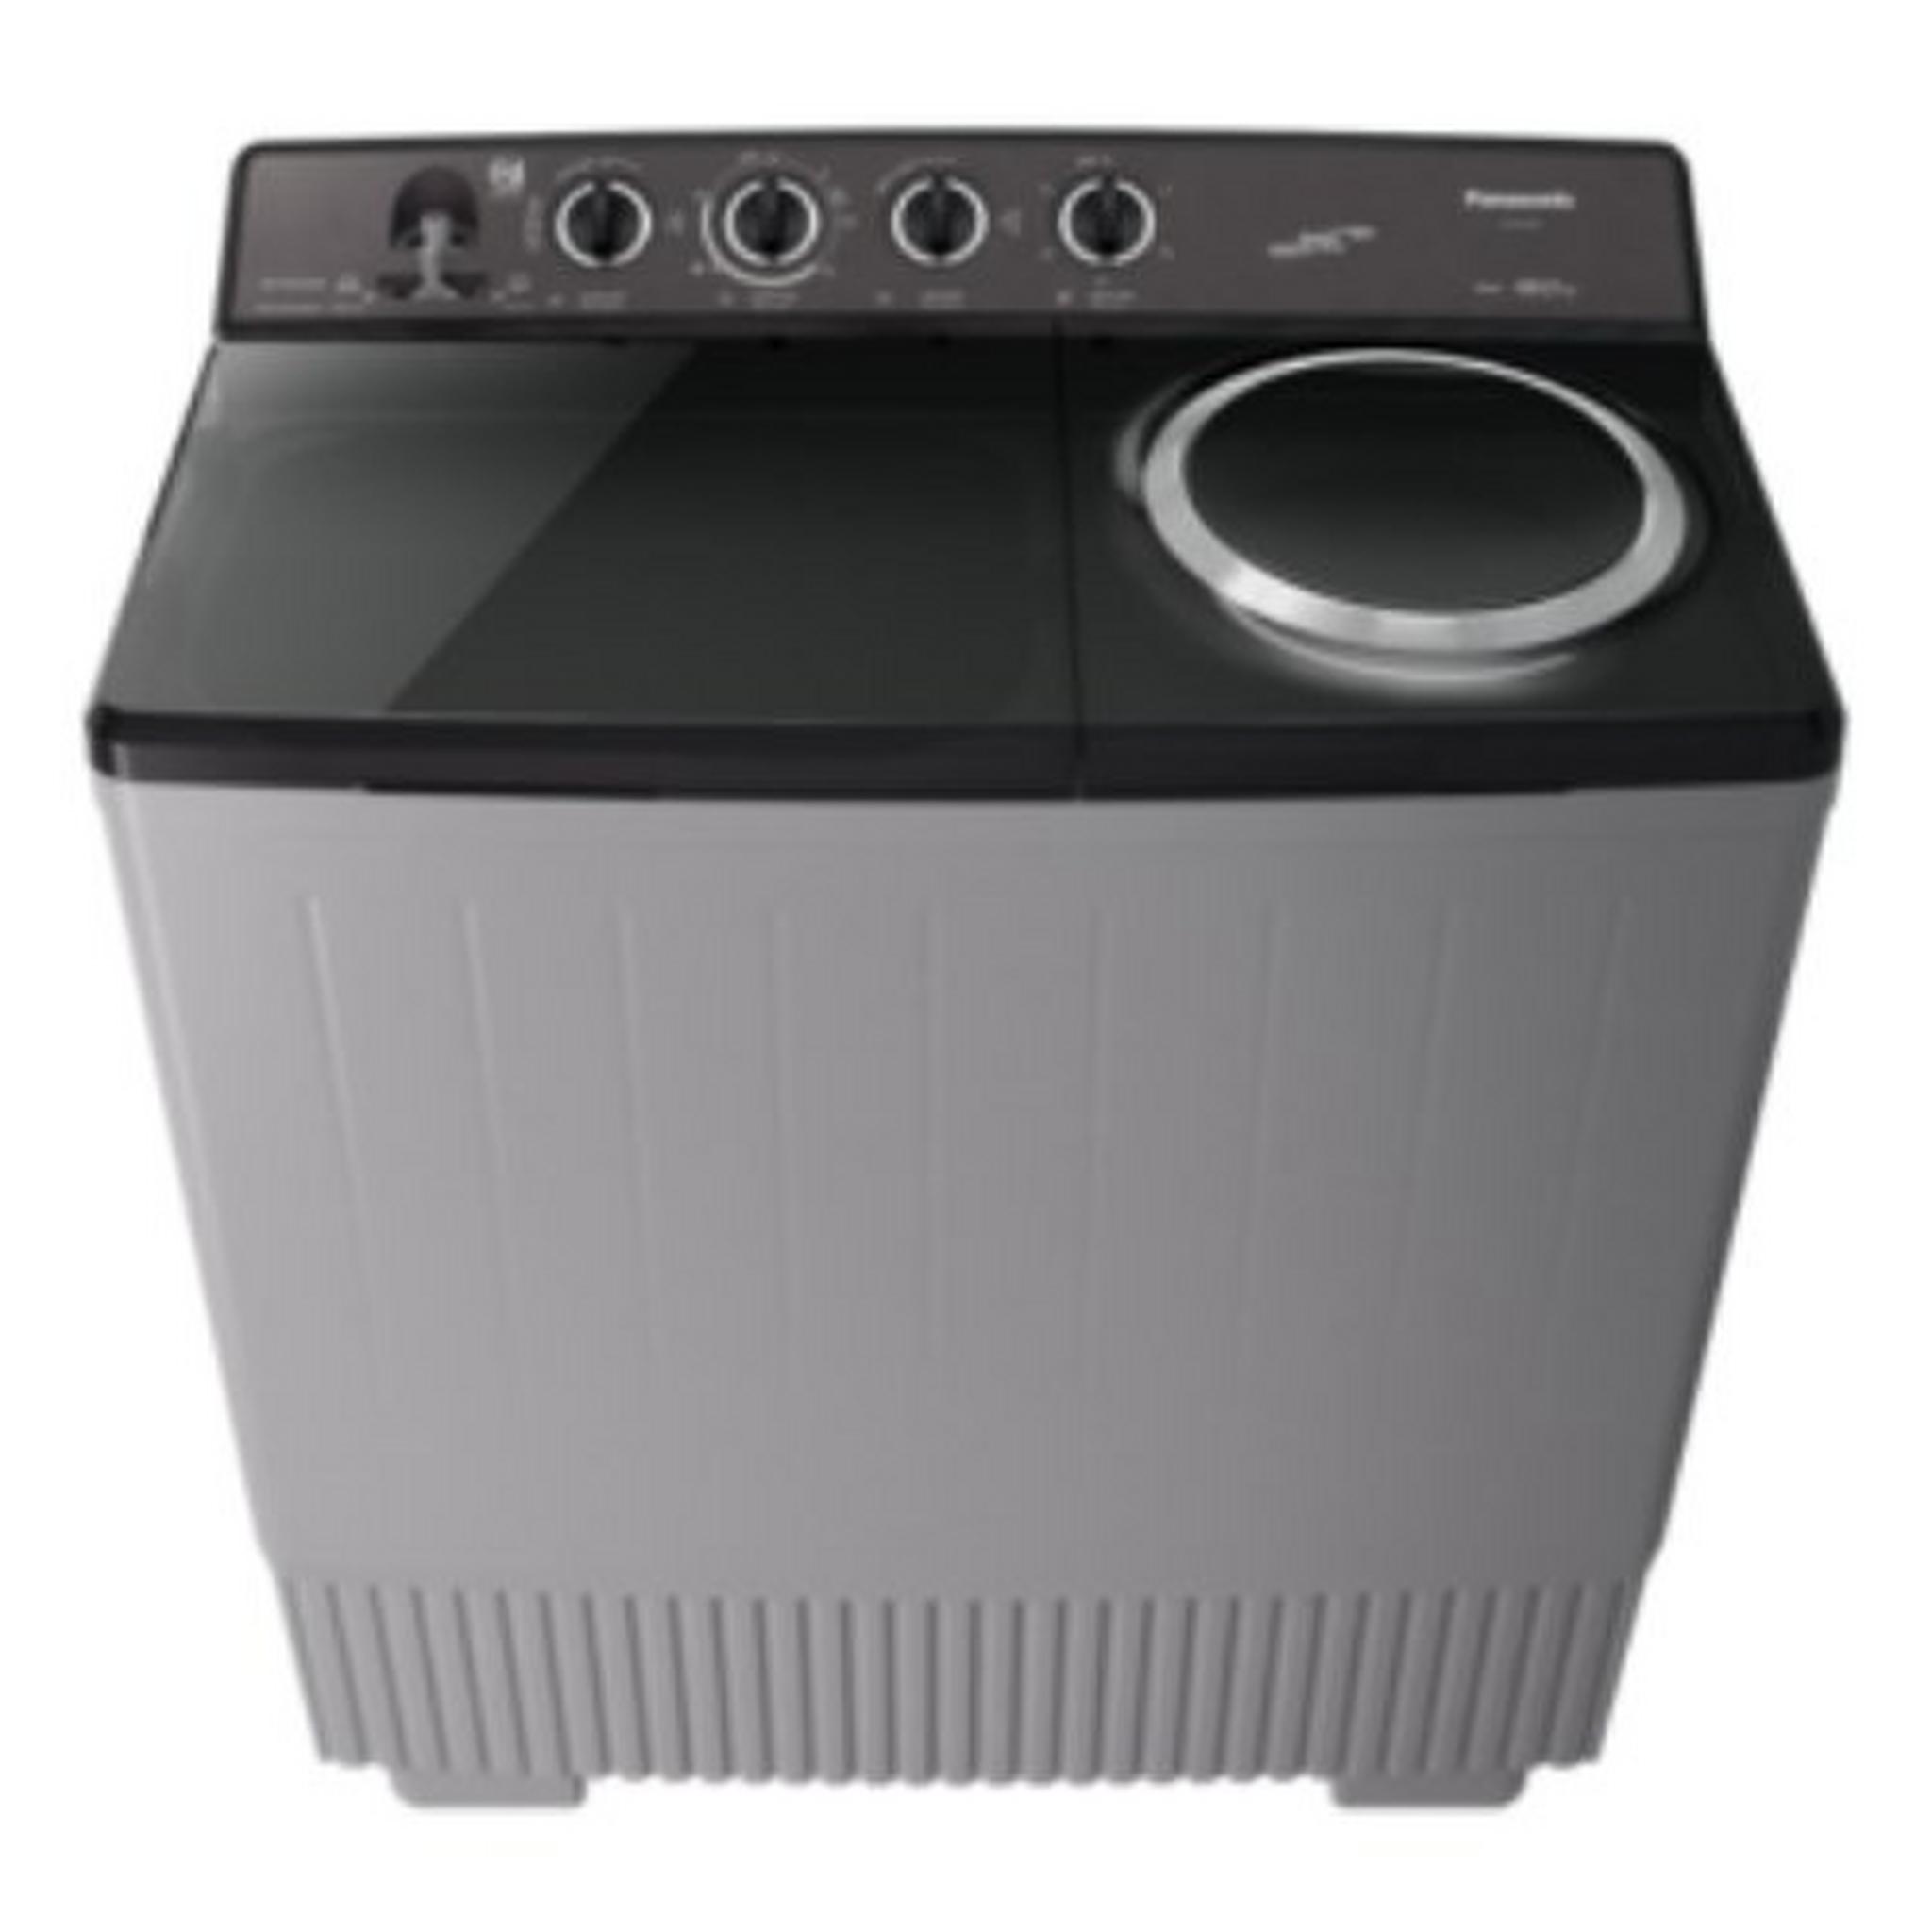 Panasonic Twin Tub Washer 18Kg Washing Capacity, 13kg Drying Capacity - NA-W18XG1BRU - Grey